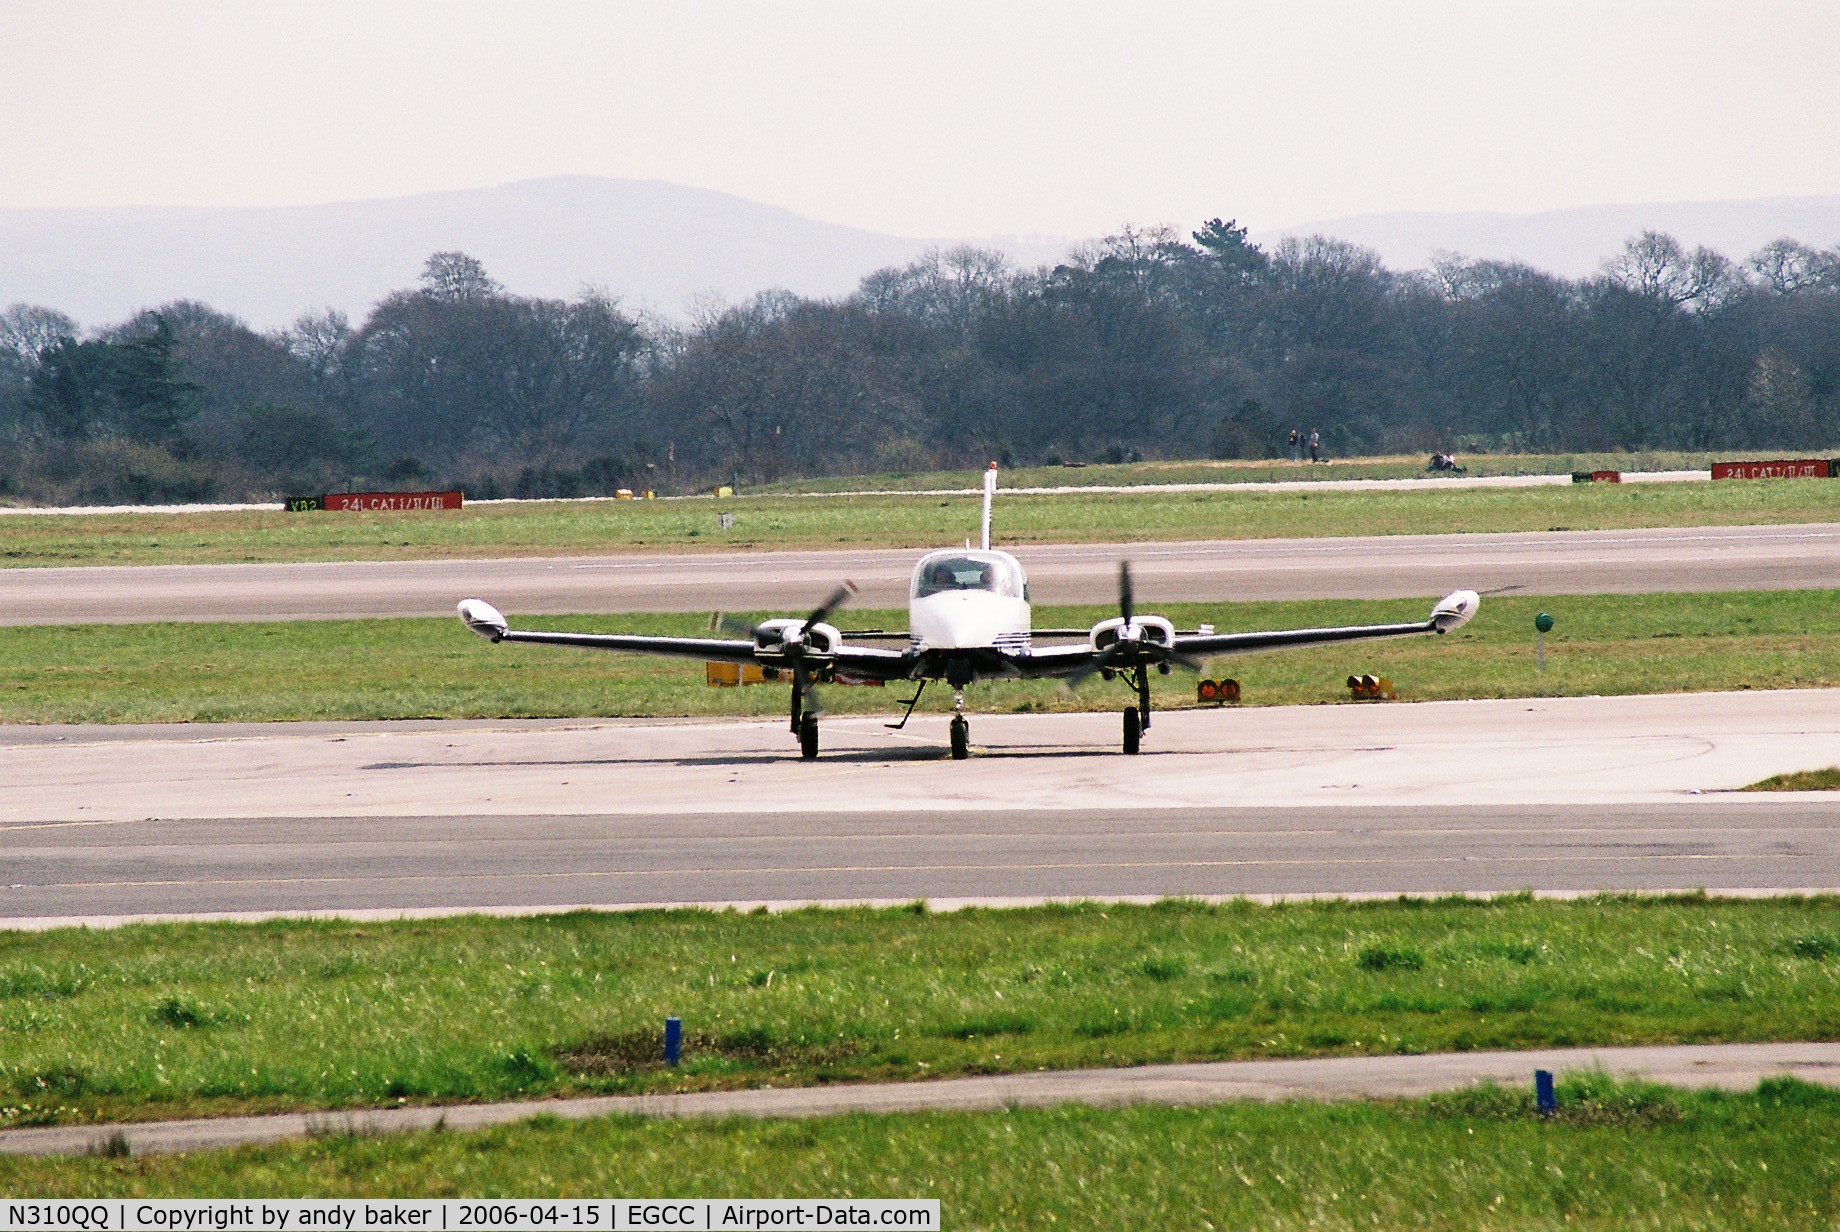 N310QQ, 1973 Cessna 310Q C/N 310Q0695, aircraft just runway [24R] heading for the [NEA]ramp shot taken from [AVP].